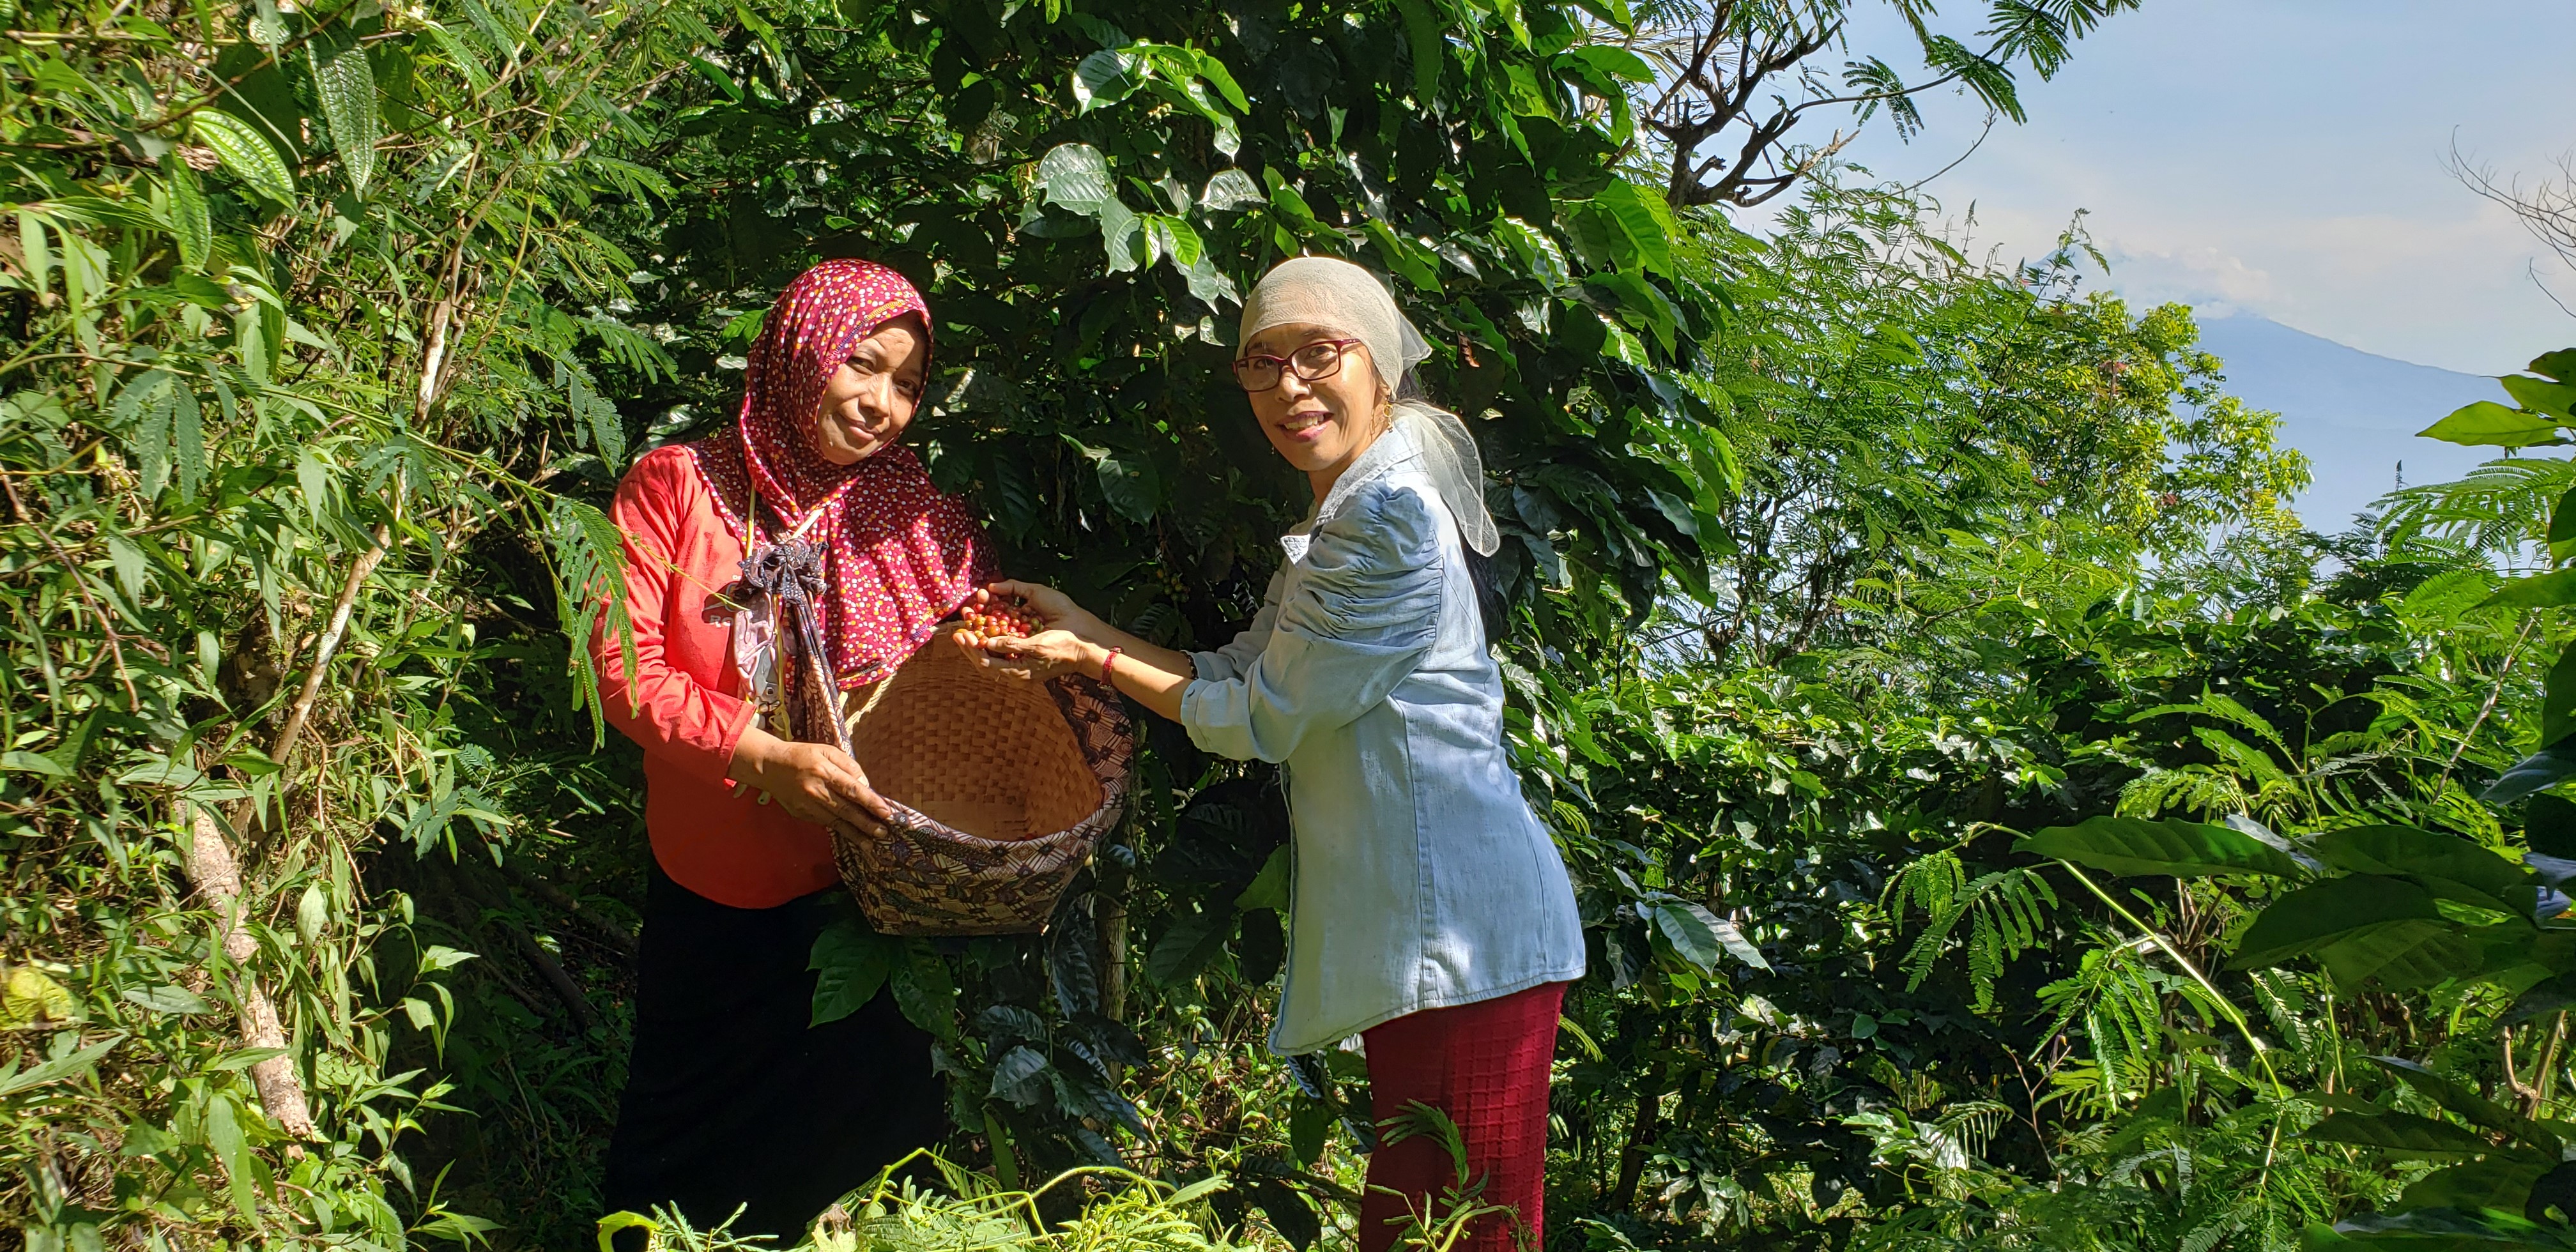 Farsijana picking coffee beans with Mrs. Marwiyah.